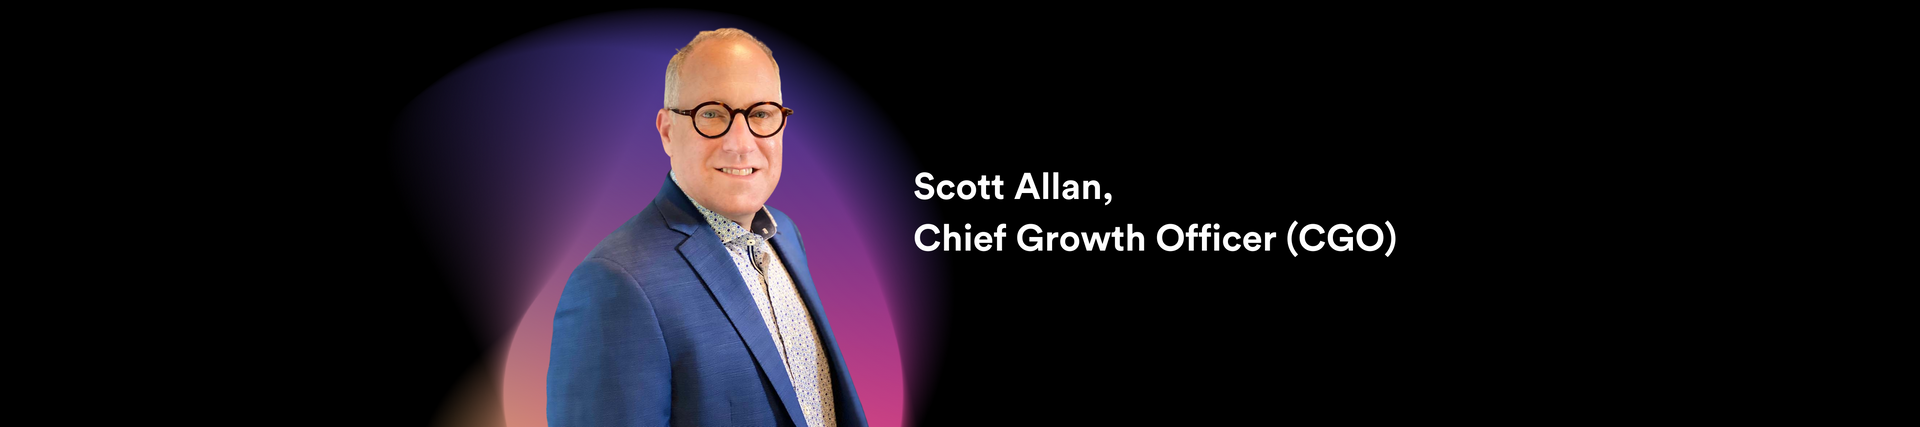 Repli Appoints Industry Veteran Scott Allan as Chief Growth Officer